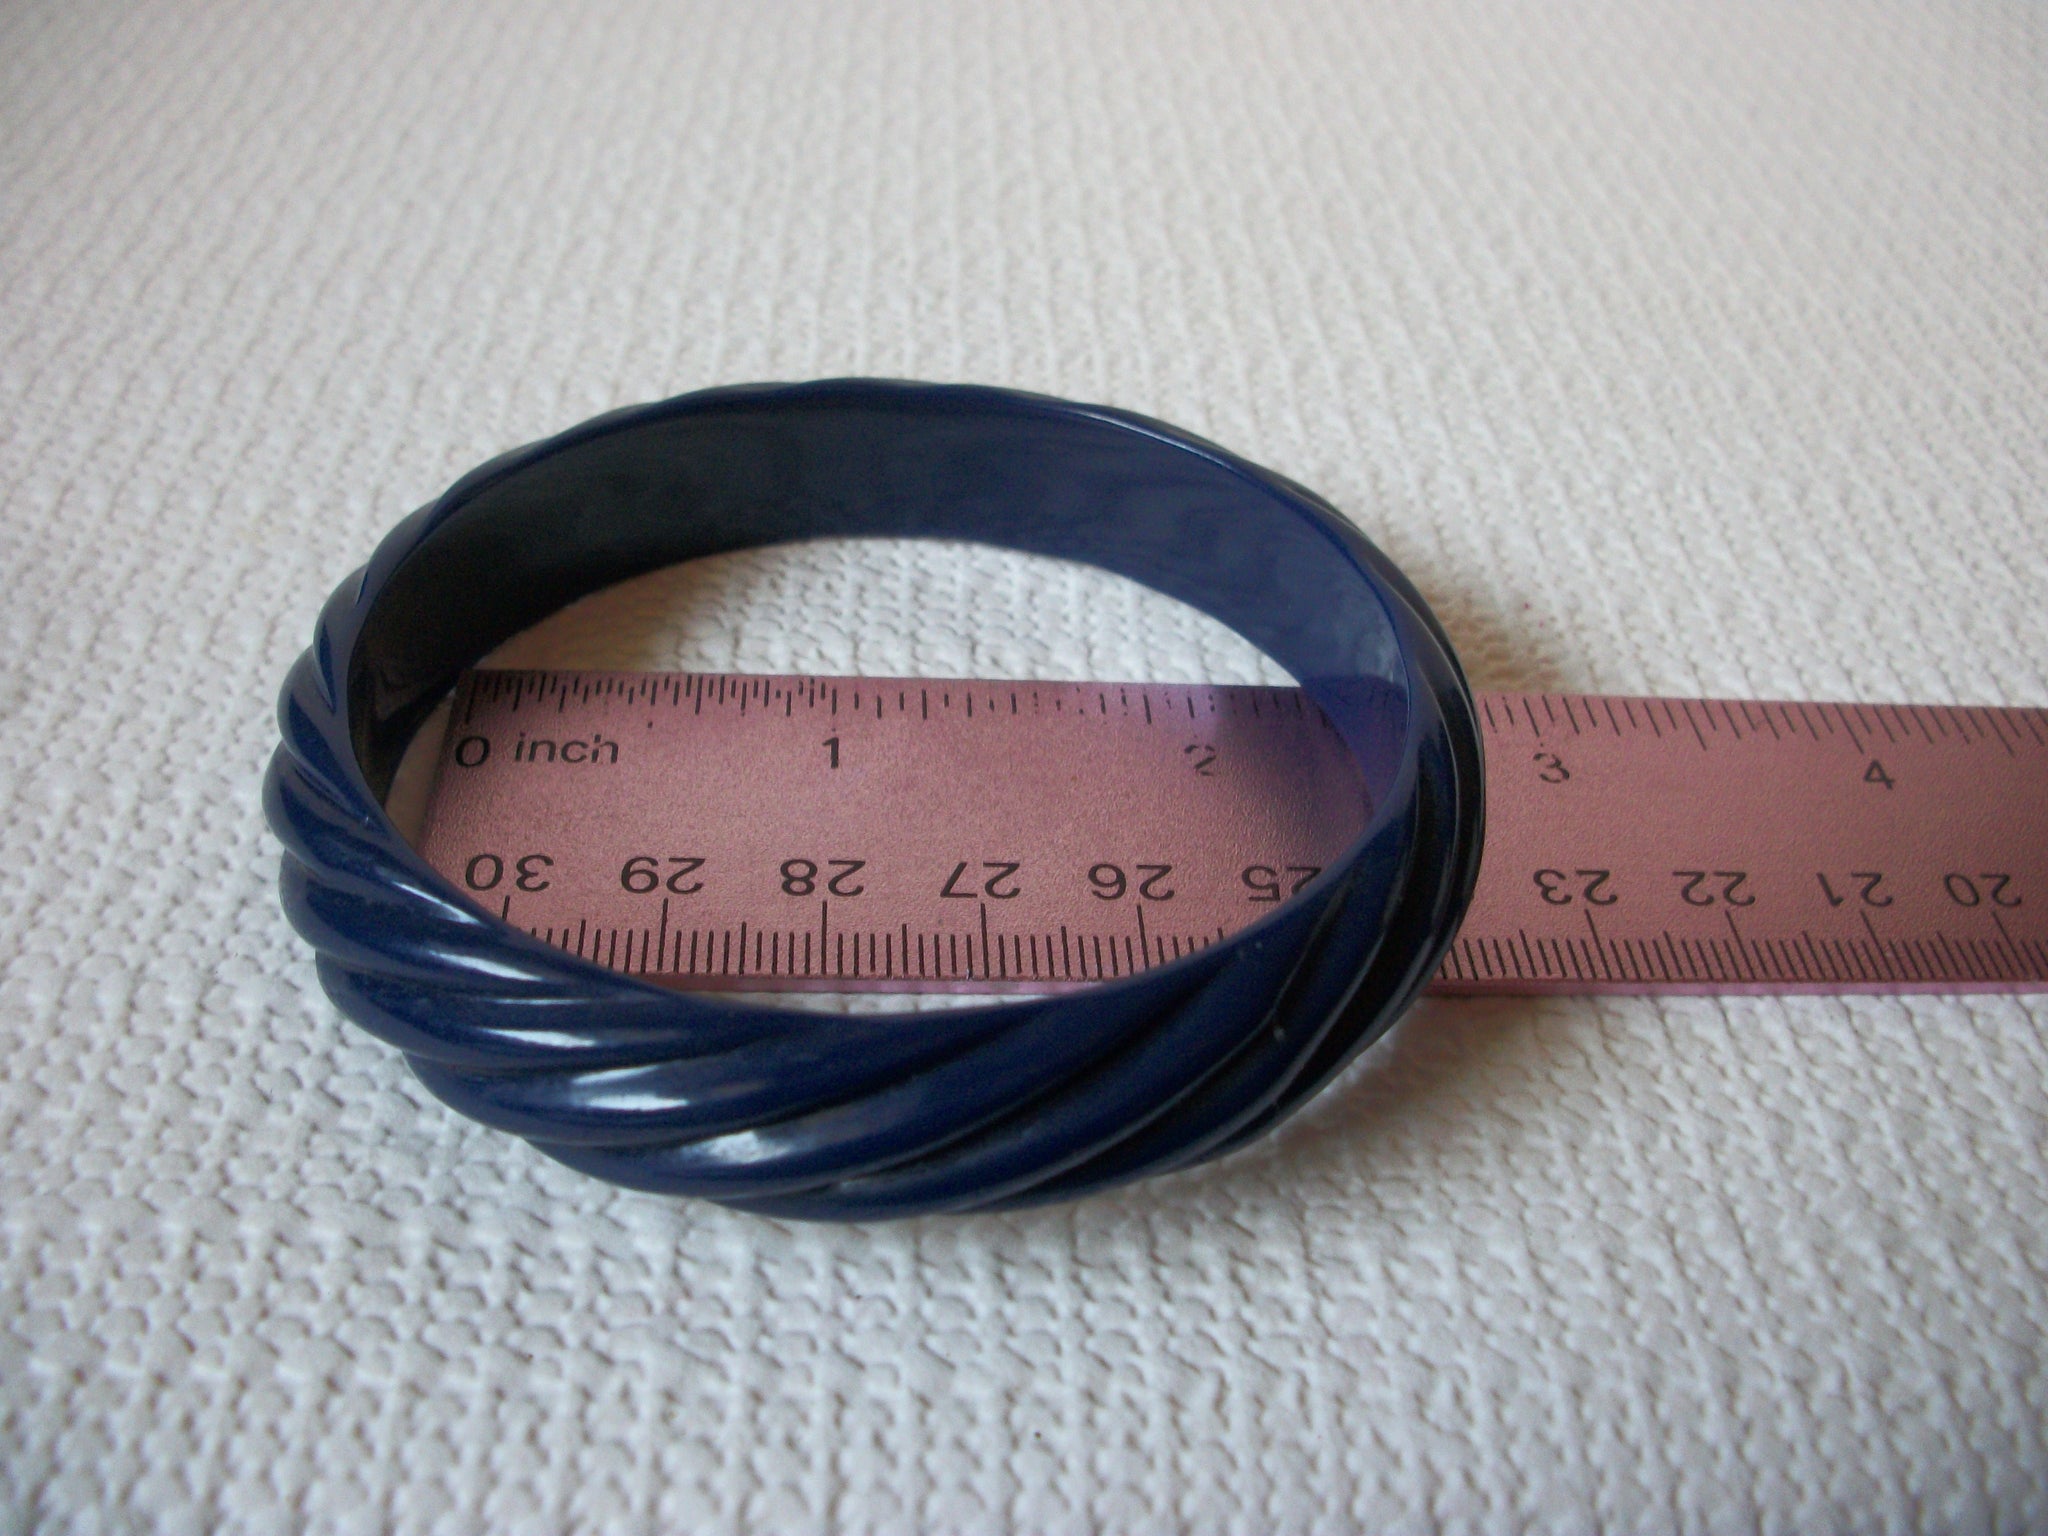 Retro Navy Blue Bangle Bracelet 73020